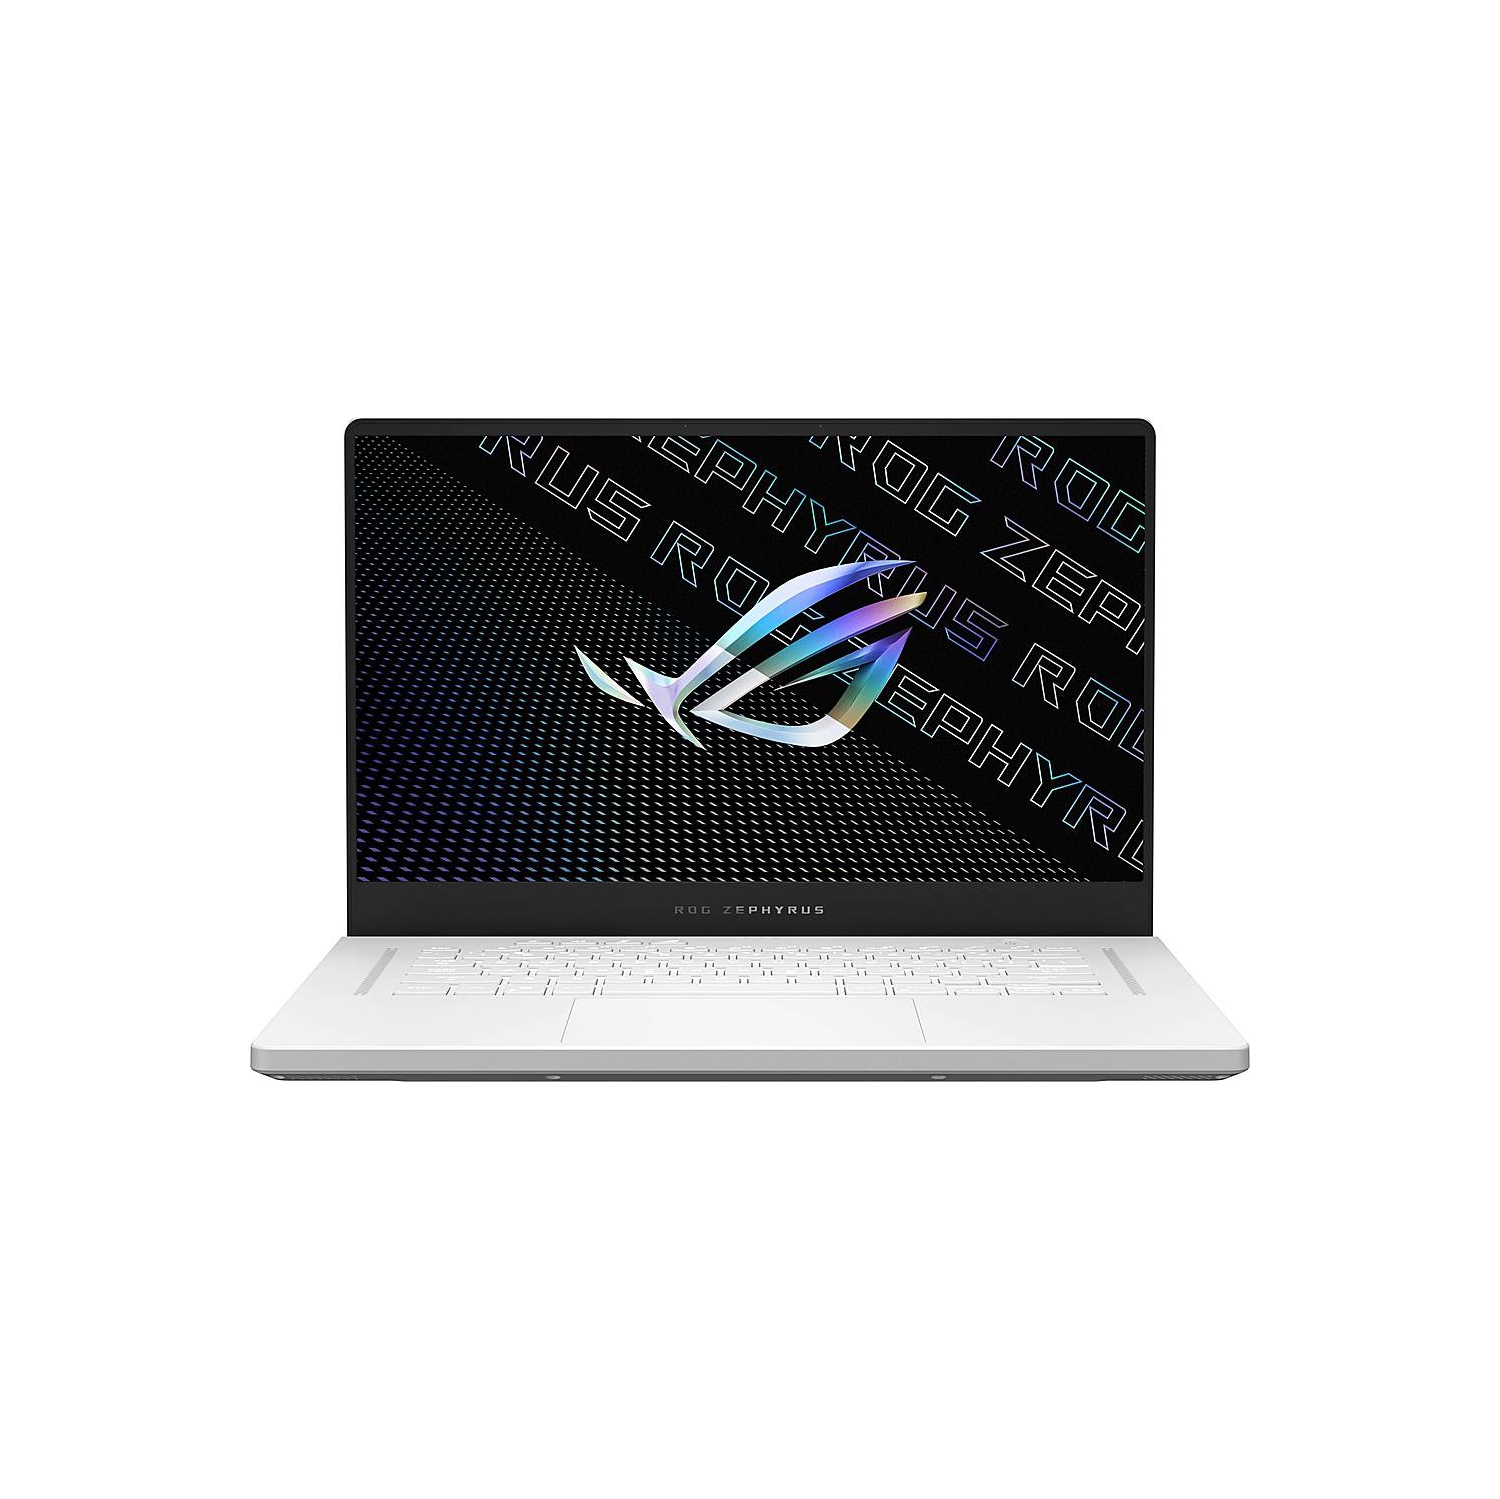 Custom ASUS ROG Zephyrus G15 Laptop (AMD Ryzen 9 5900HS, 32GB RAM, 4TB PCIe SSD, NVIDIA RTX 3080 Max-Q, Win 10 Pro)